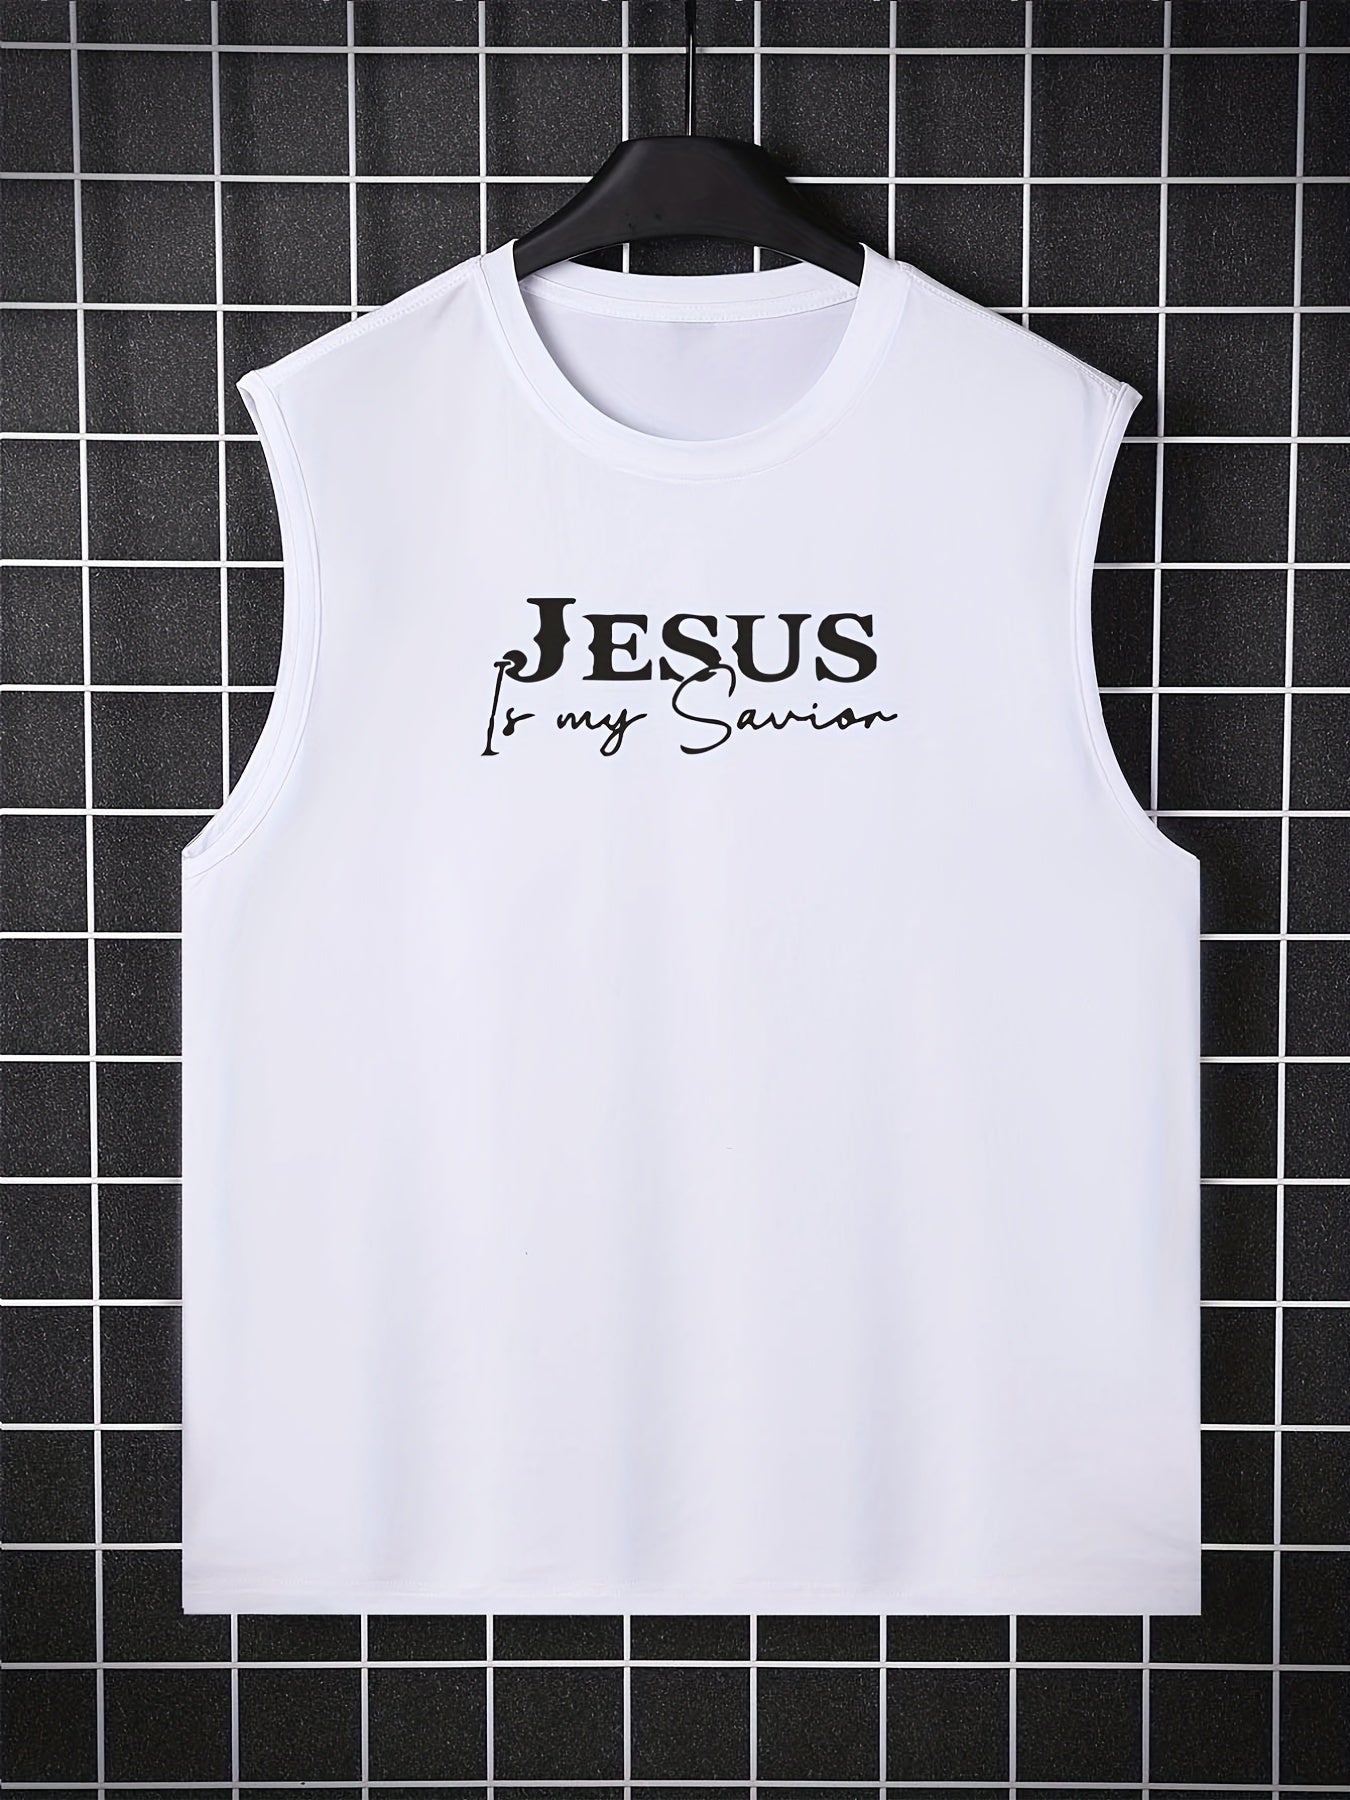 Jesus Is My Savior Men's Christian Tank Top claimedbygoddesigns